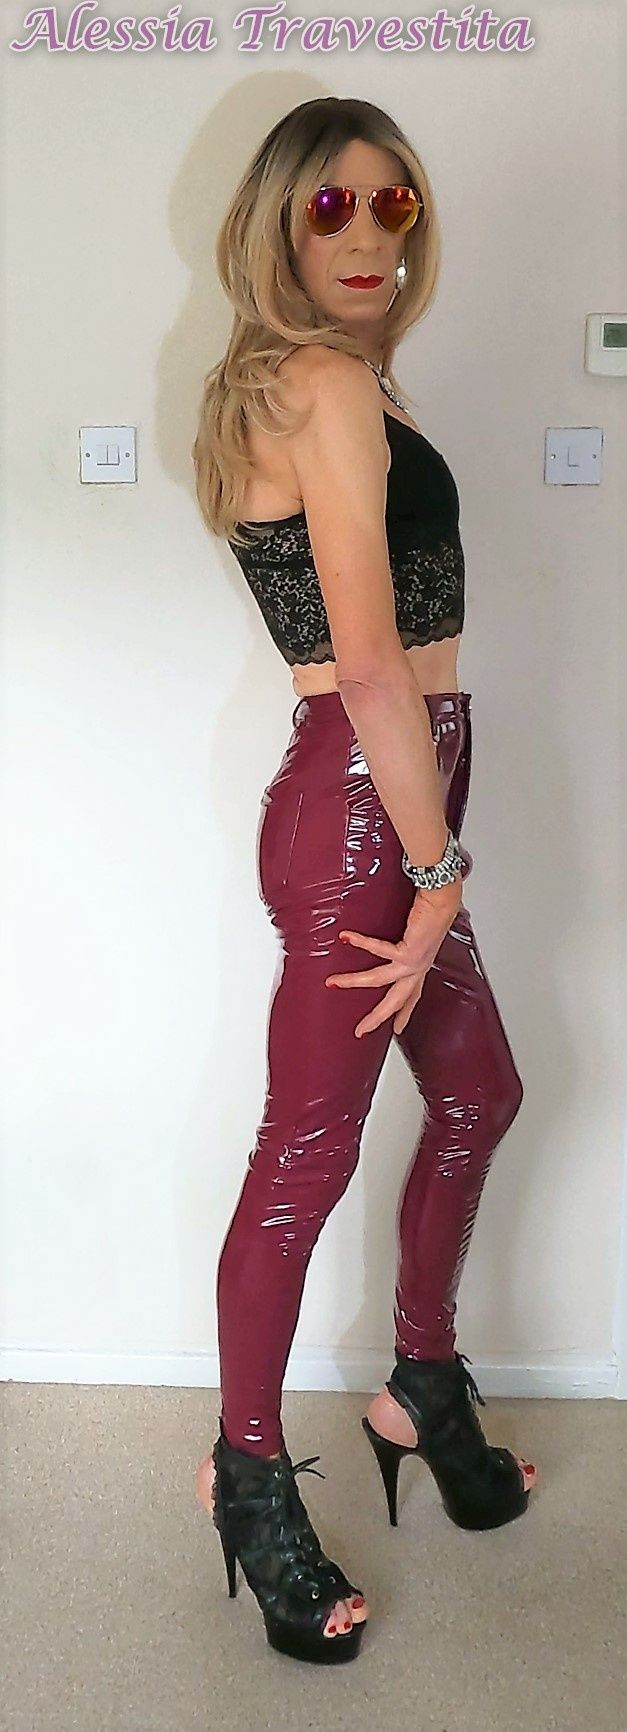 76 Alessia Travestita in Burgundy PVC Jeans #6